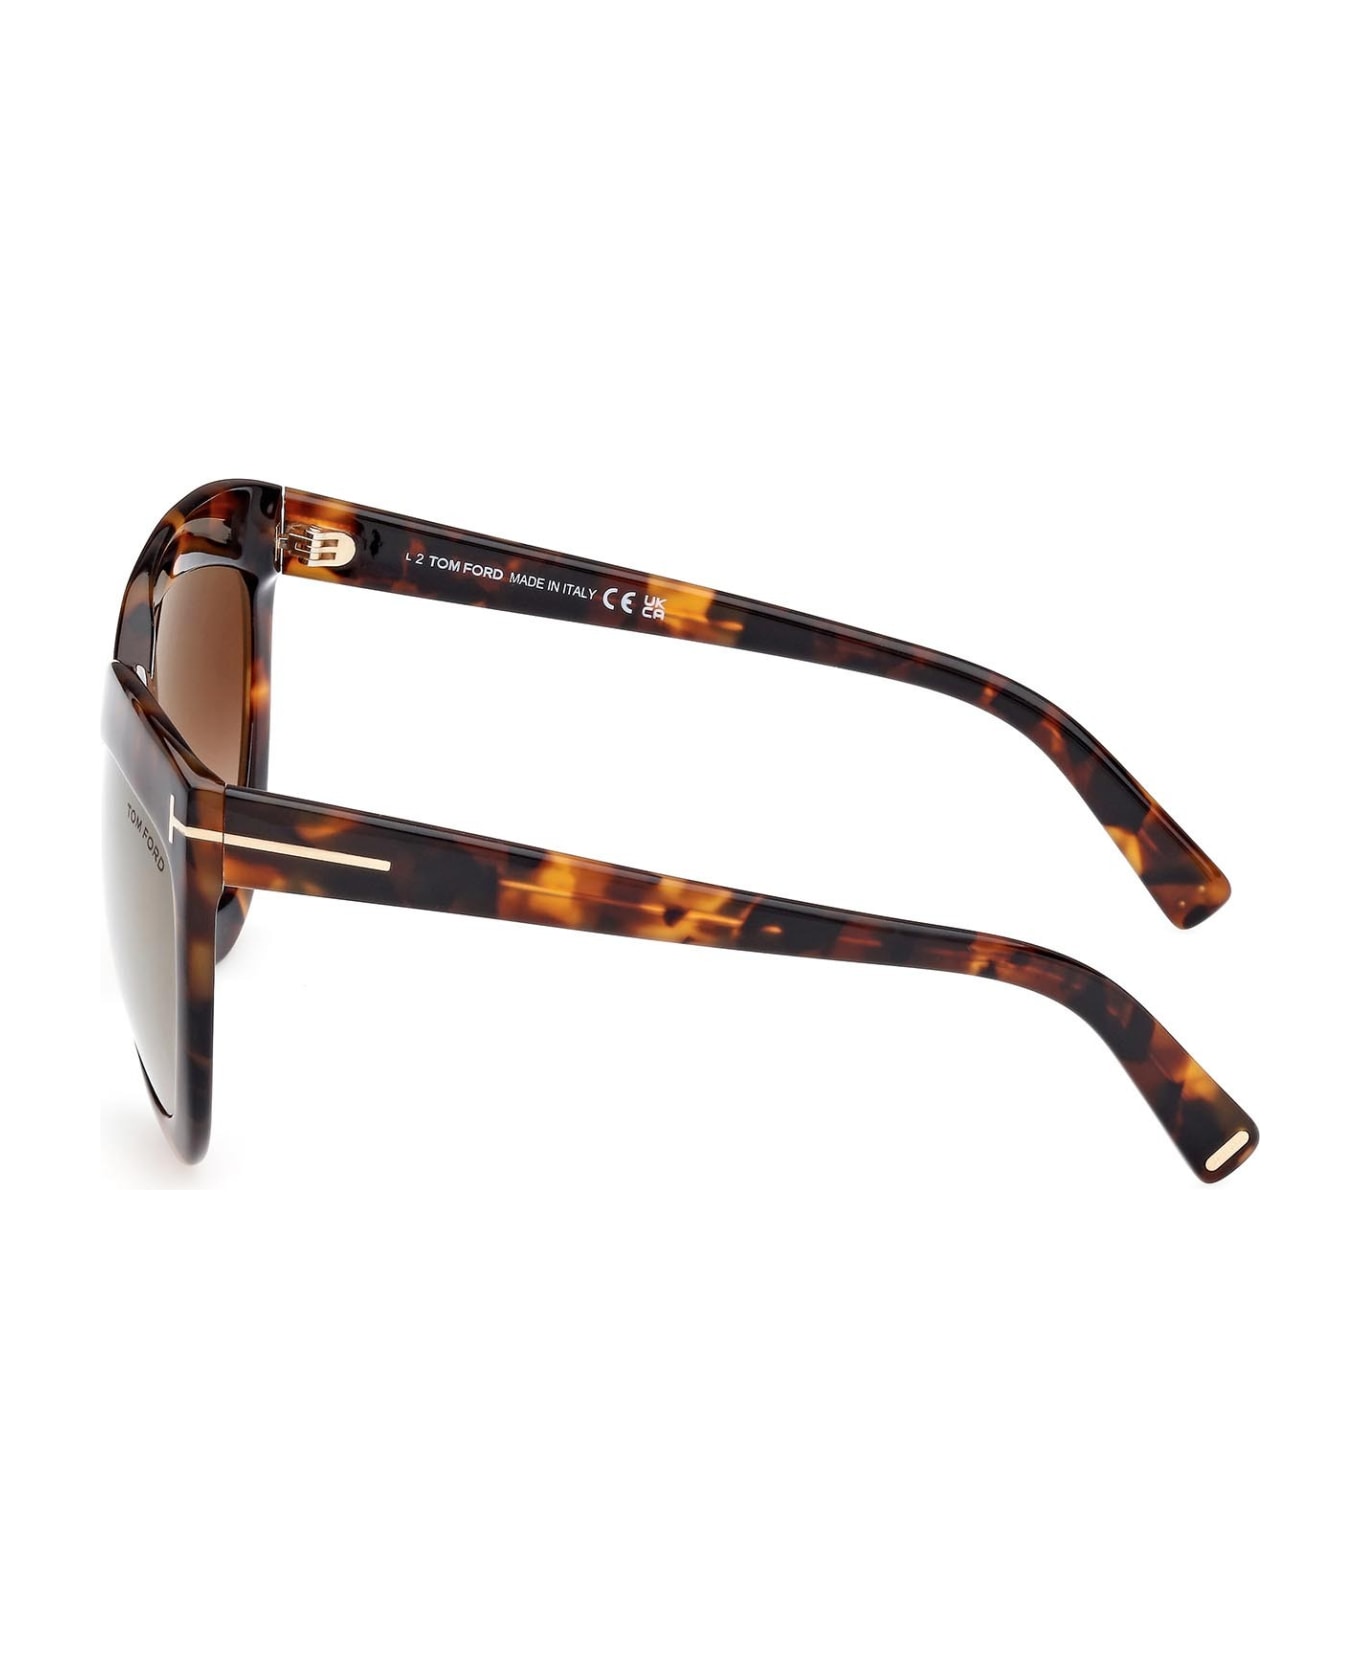 Tom Ford Eyewear Sunglasses for - Havana/Marrone sfumato